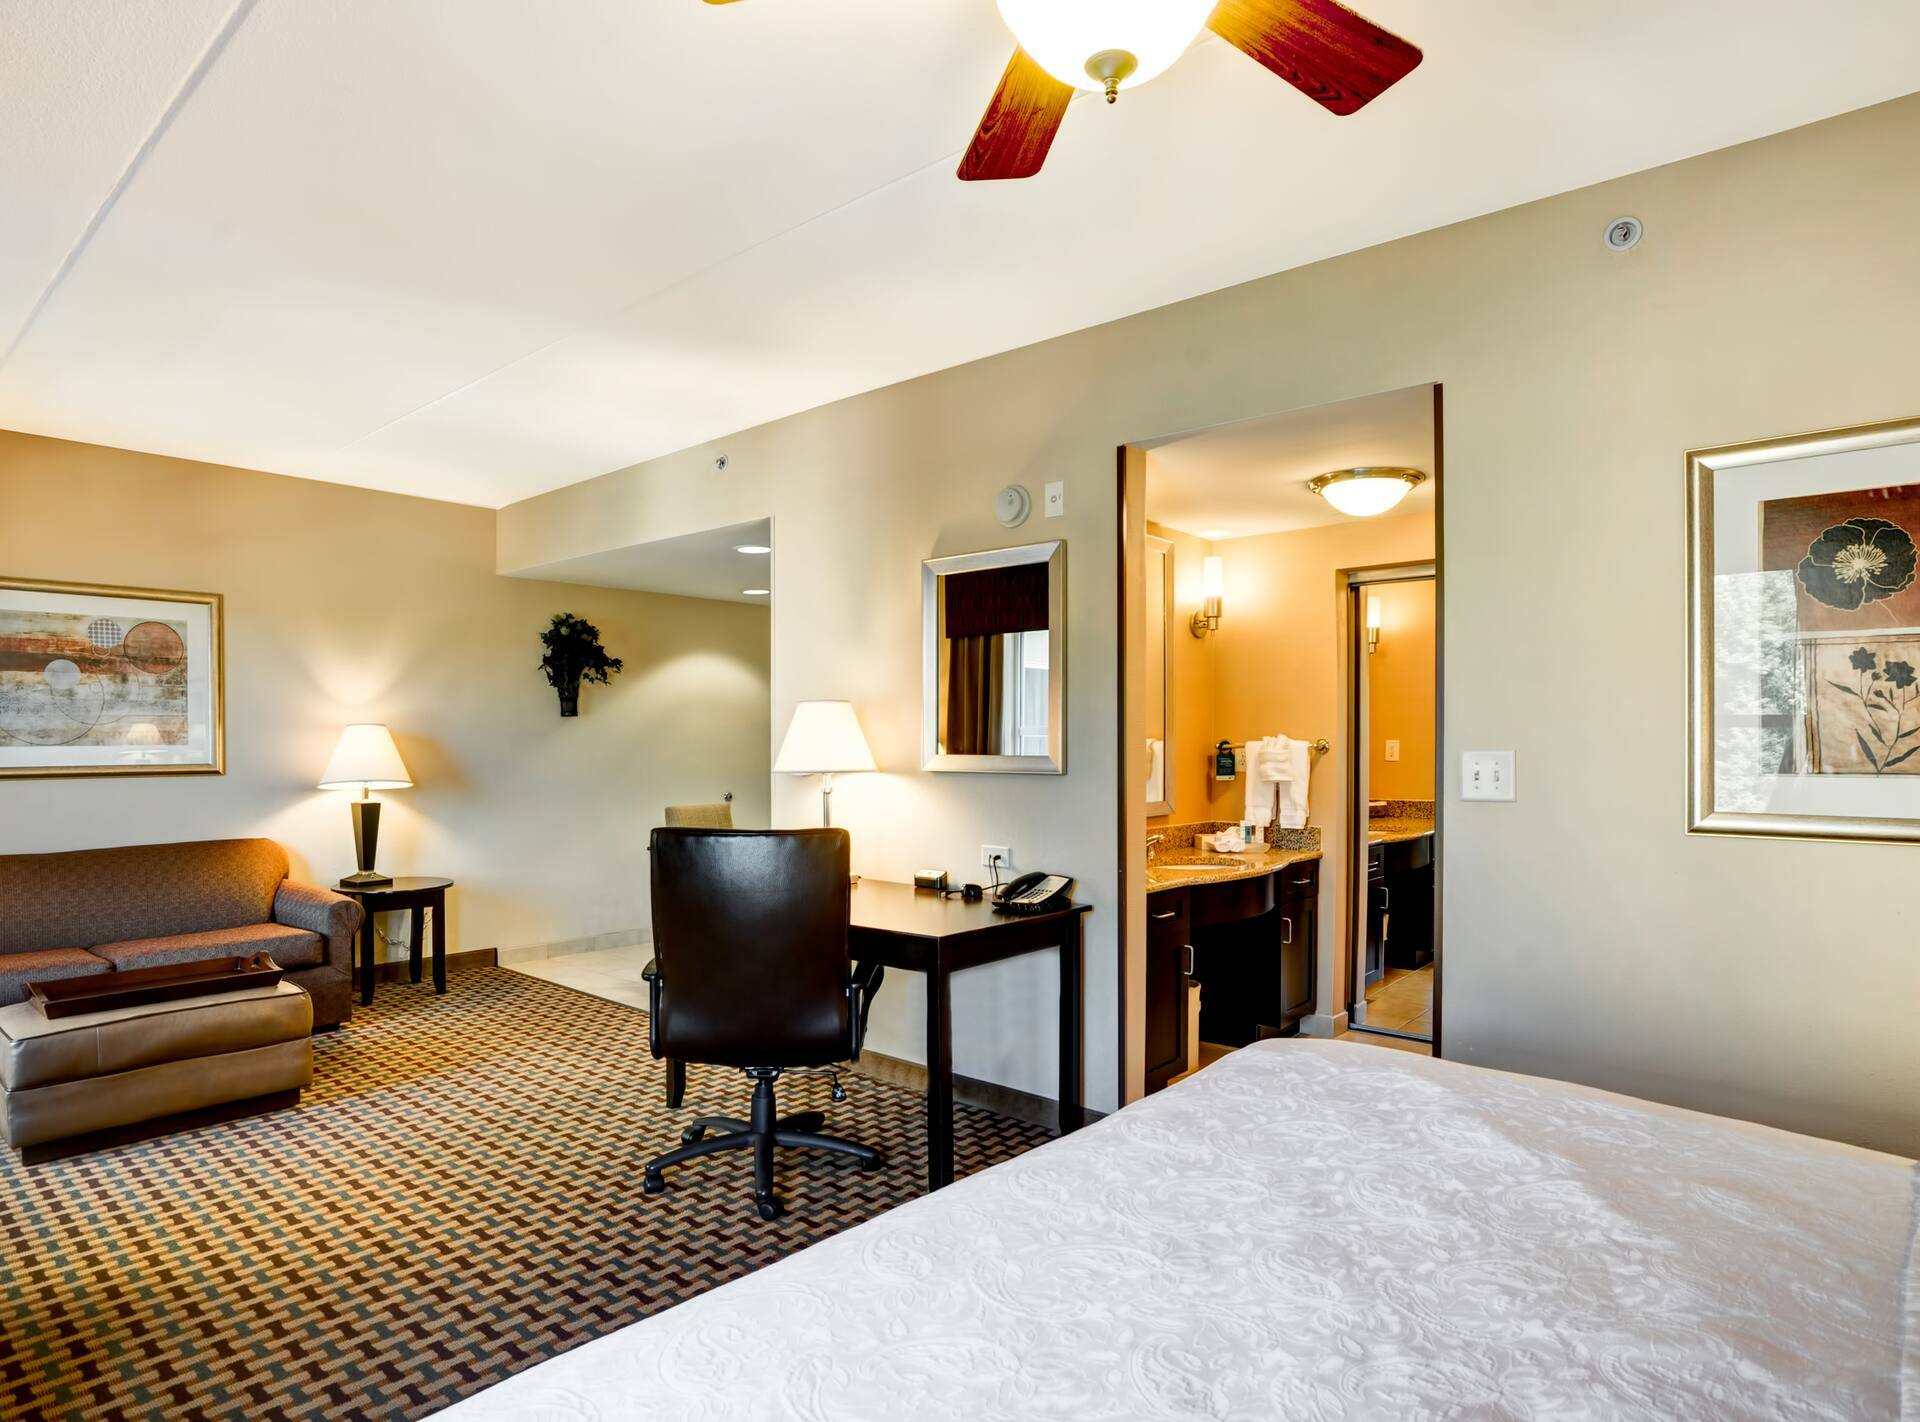 Photo of Homewood Suites by Hilton Bel Air, Bel Air, MD